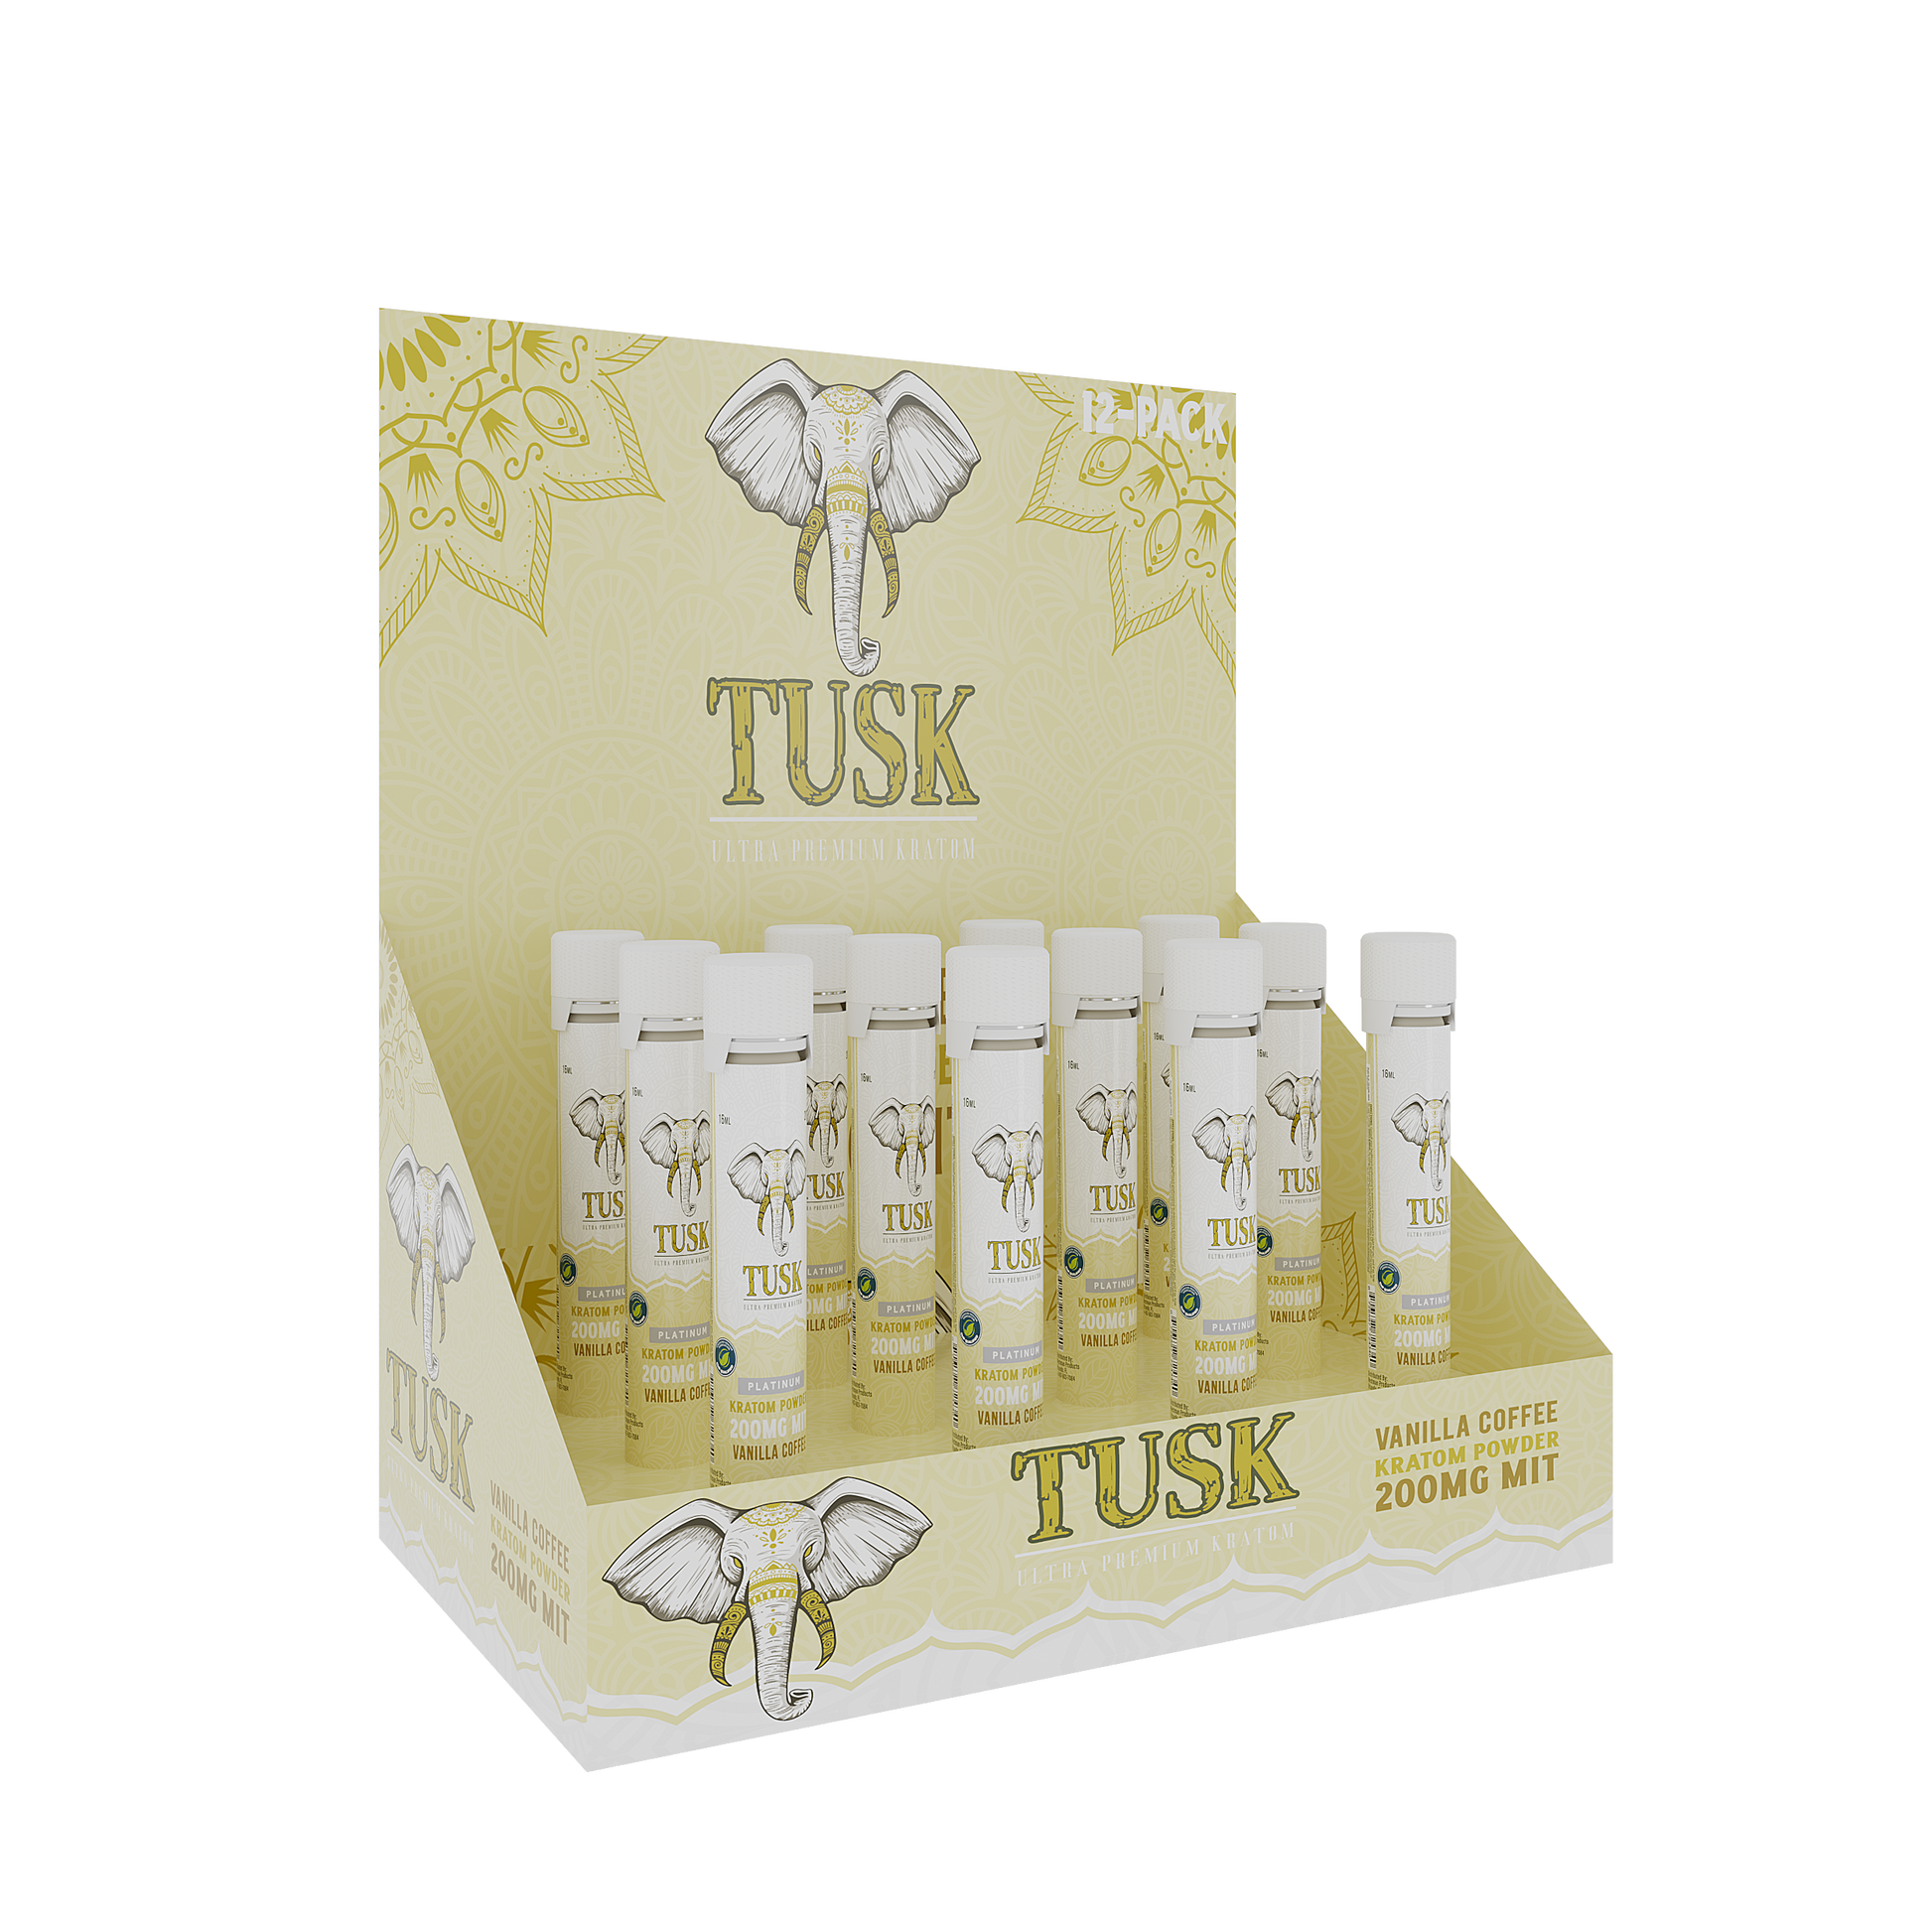 Tusk - Platinum Extract Powder 200mg